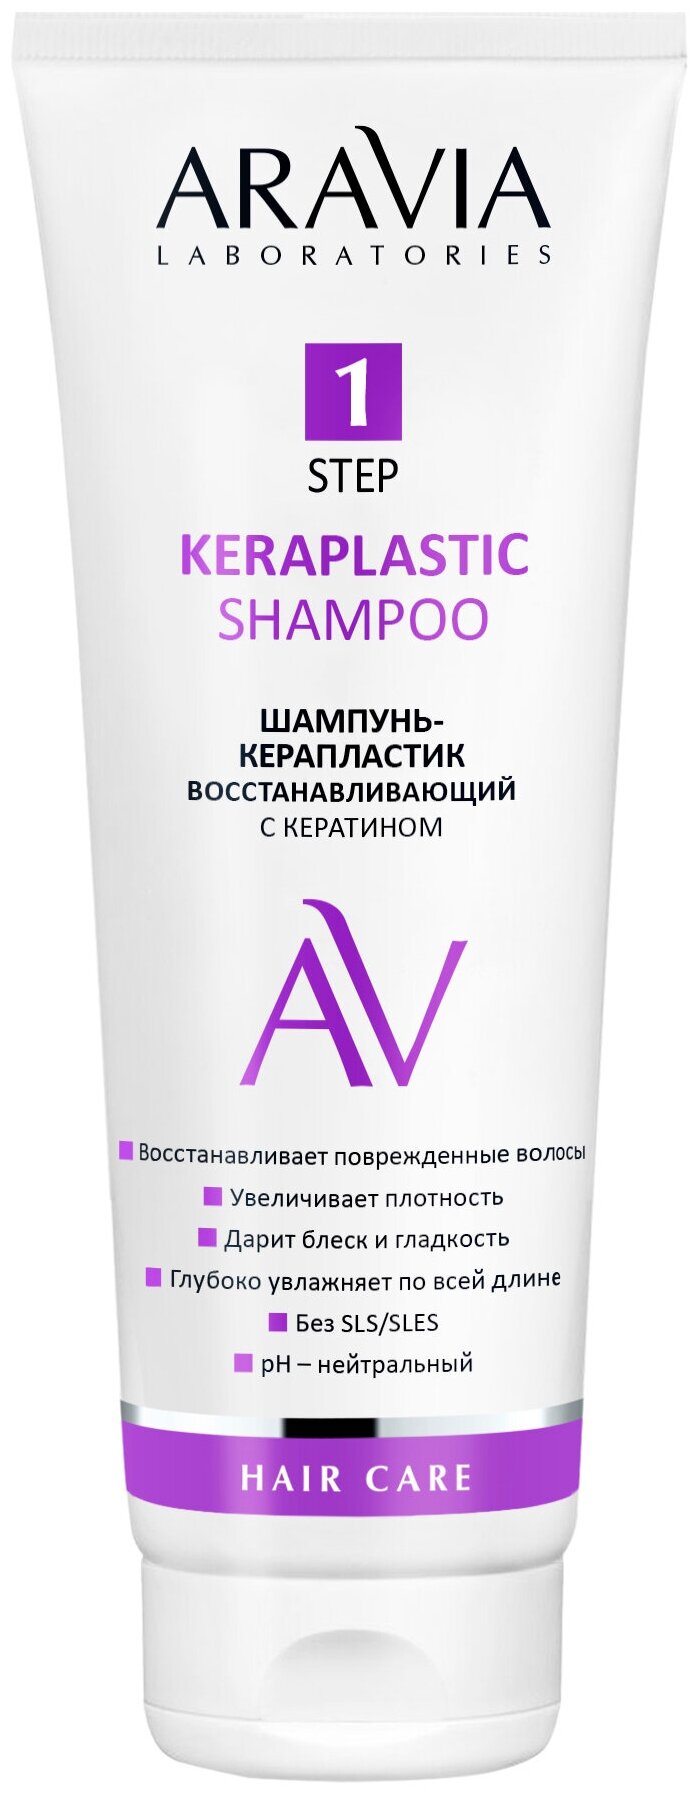 ARAVIA Шампунь-керапластик восстанавливающий с кератином Keraplastic Shampoo, 250 мл